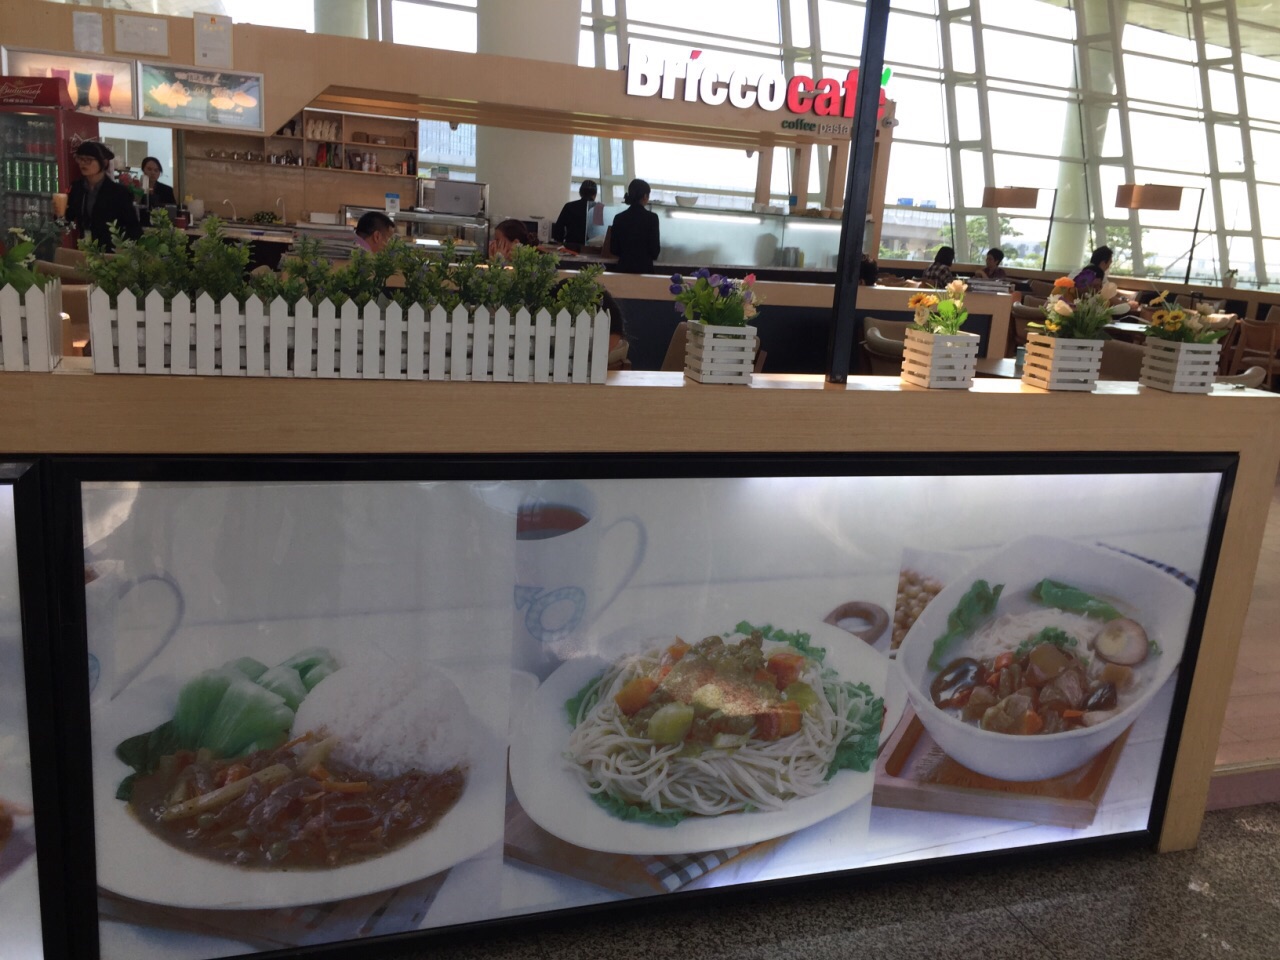 2022bricco cafe倍可意(宝安机场t3店)美食餐厅,让人感觉很舒服的一家